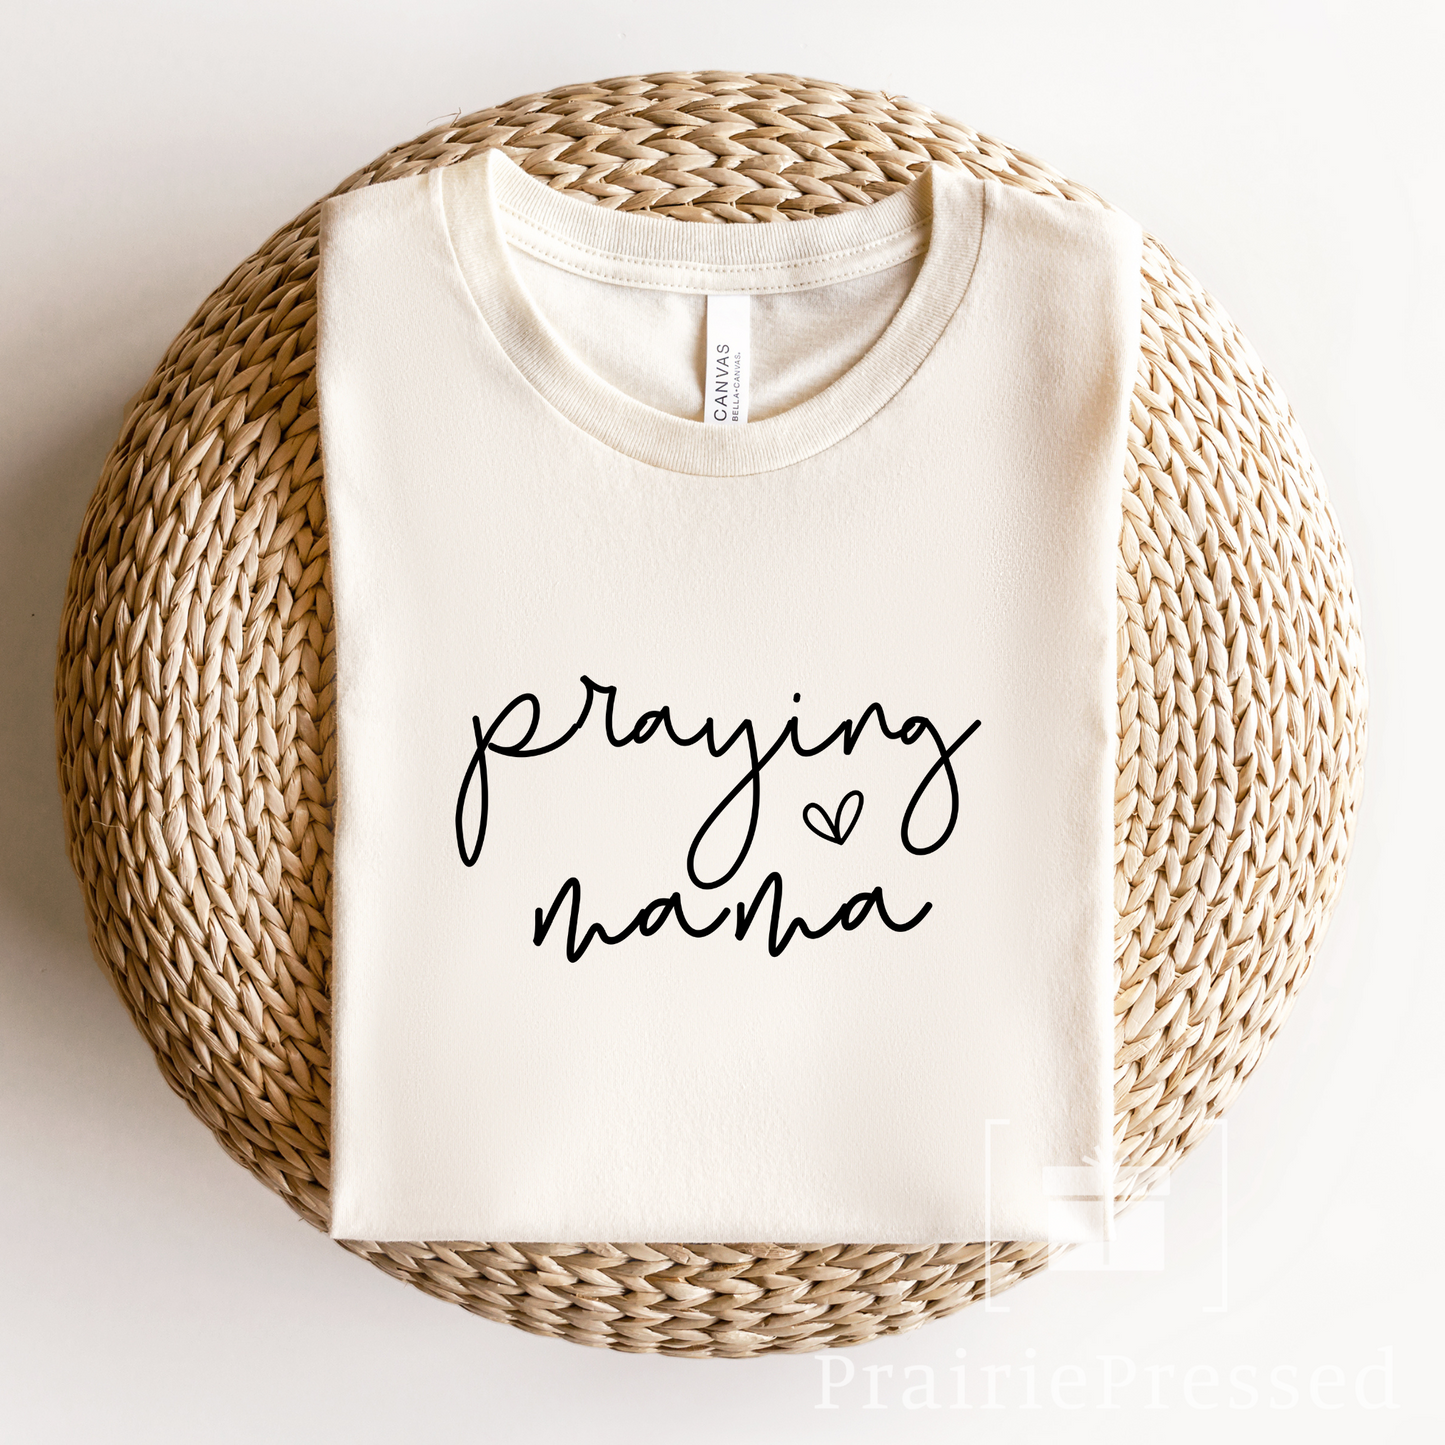 Praying Mama T Shirt